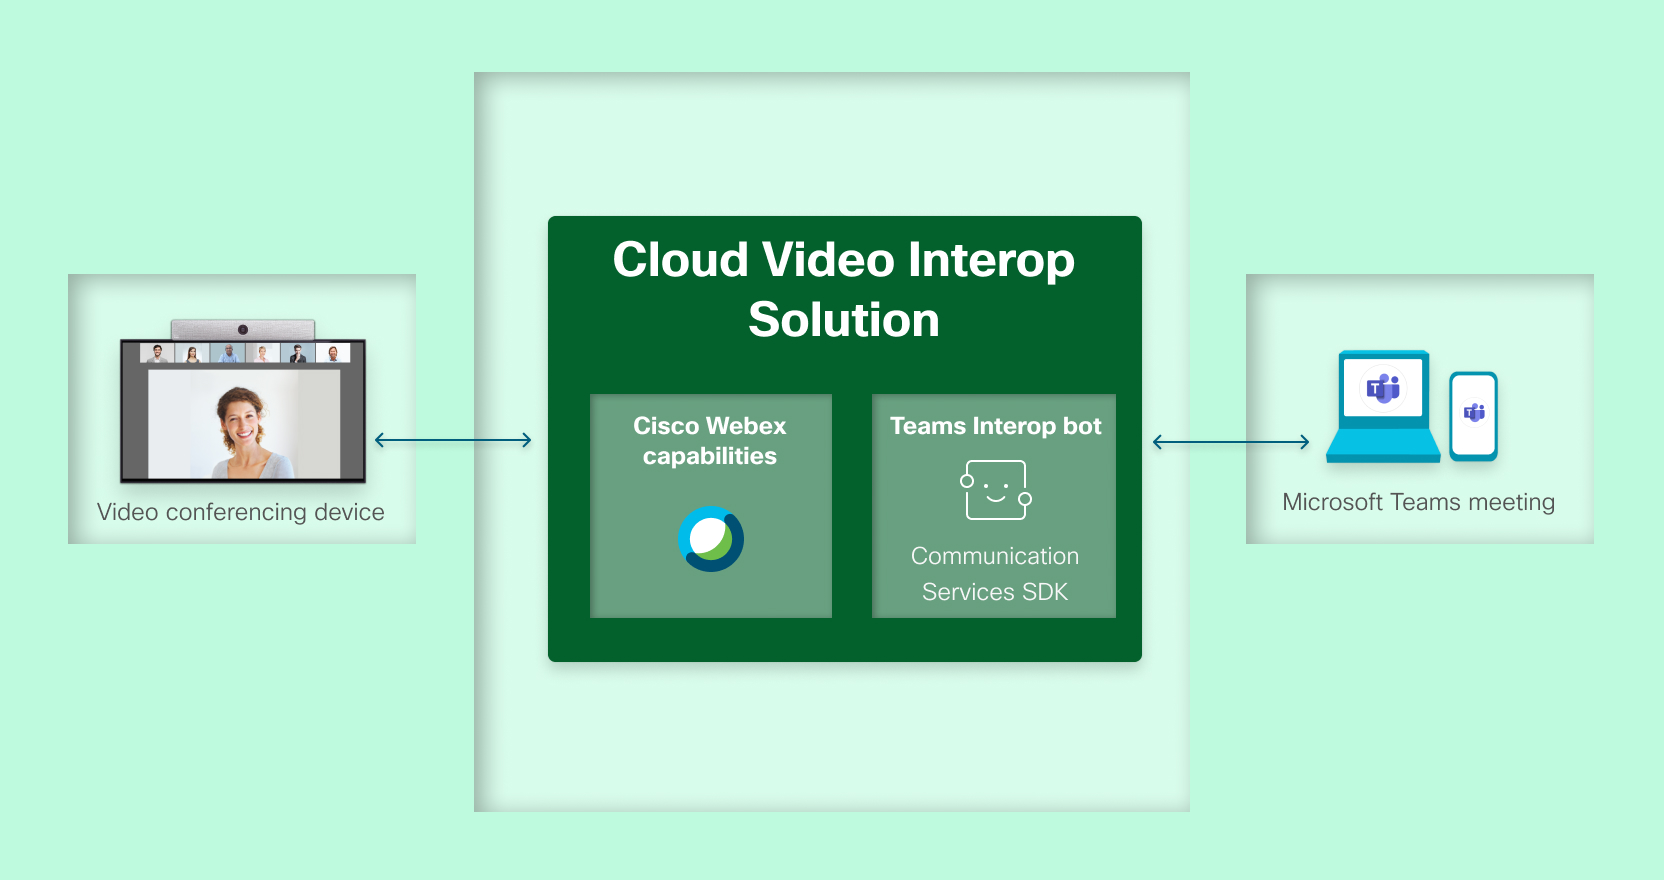 CVI-architectuurafbeelding gebaseerd op https://docs.microsoft.com/en-us/microsoftteams/cloud-video-interop